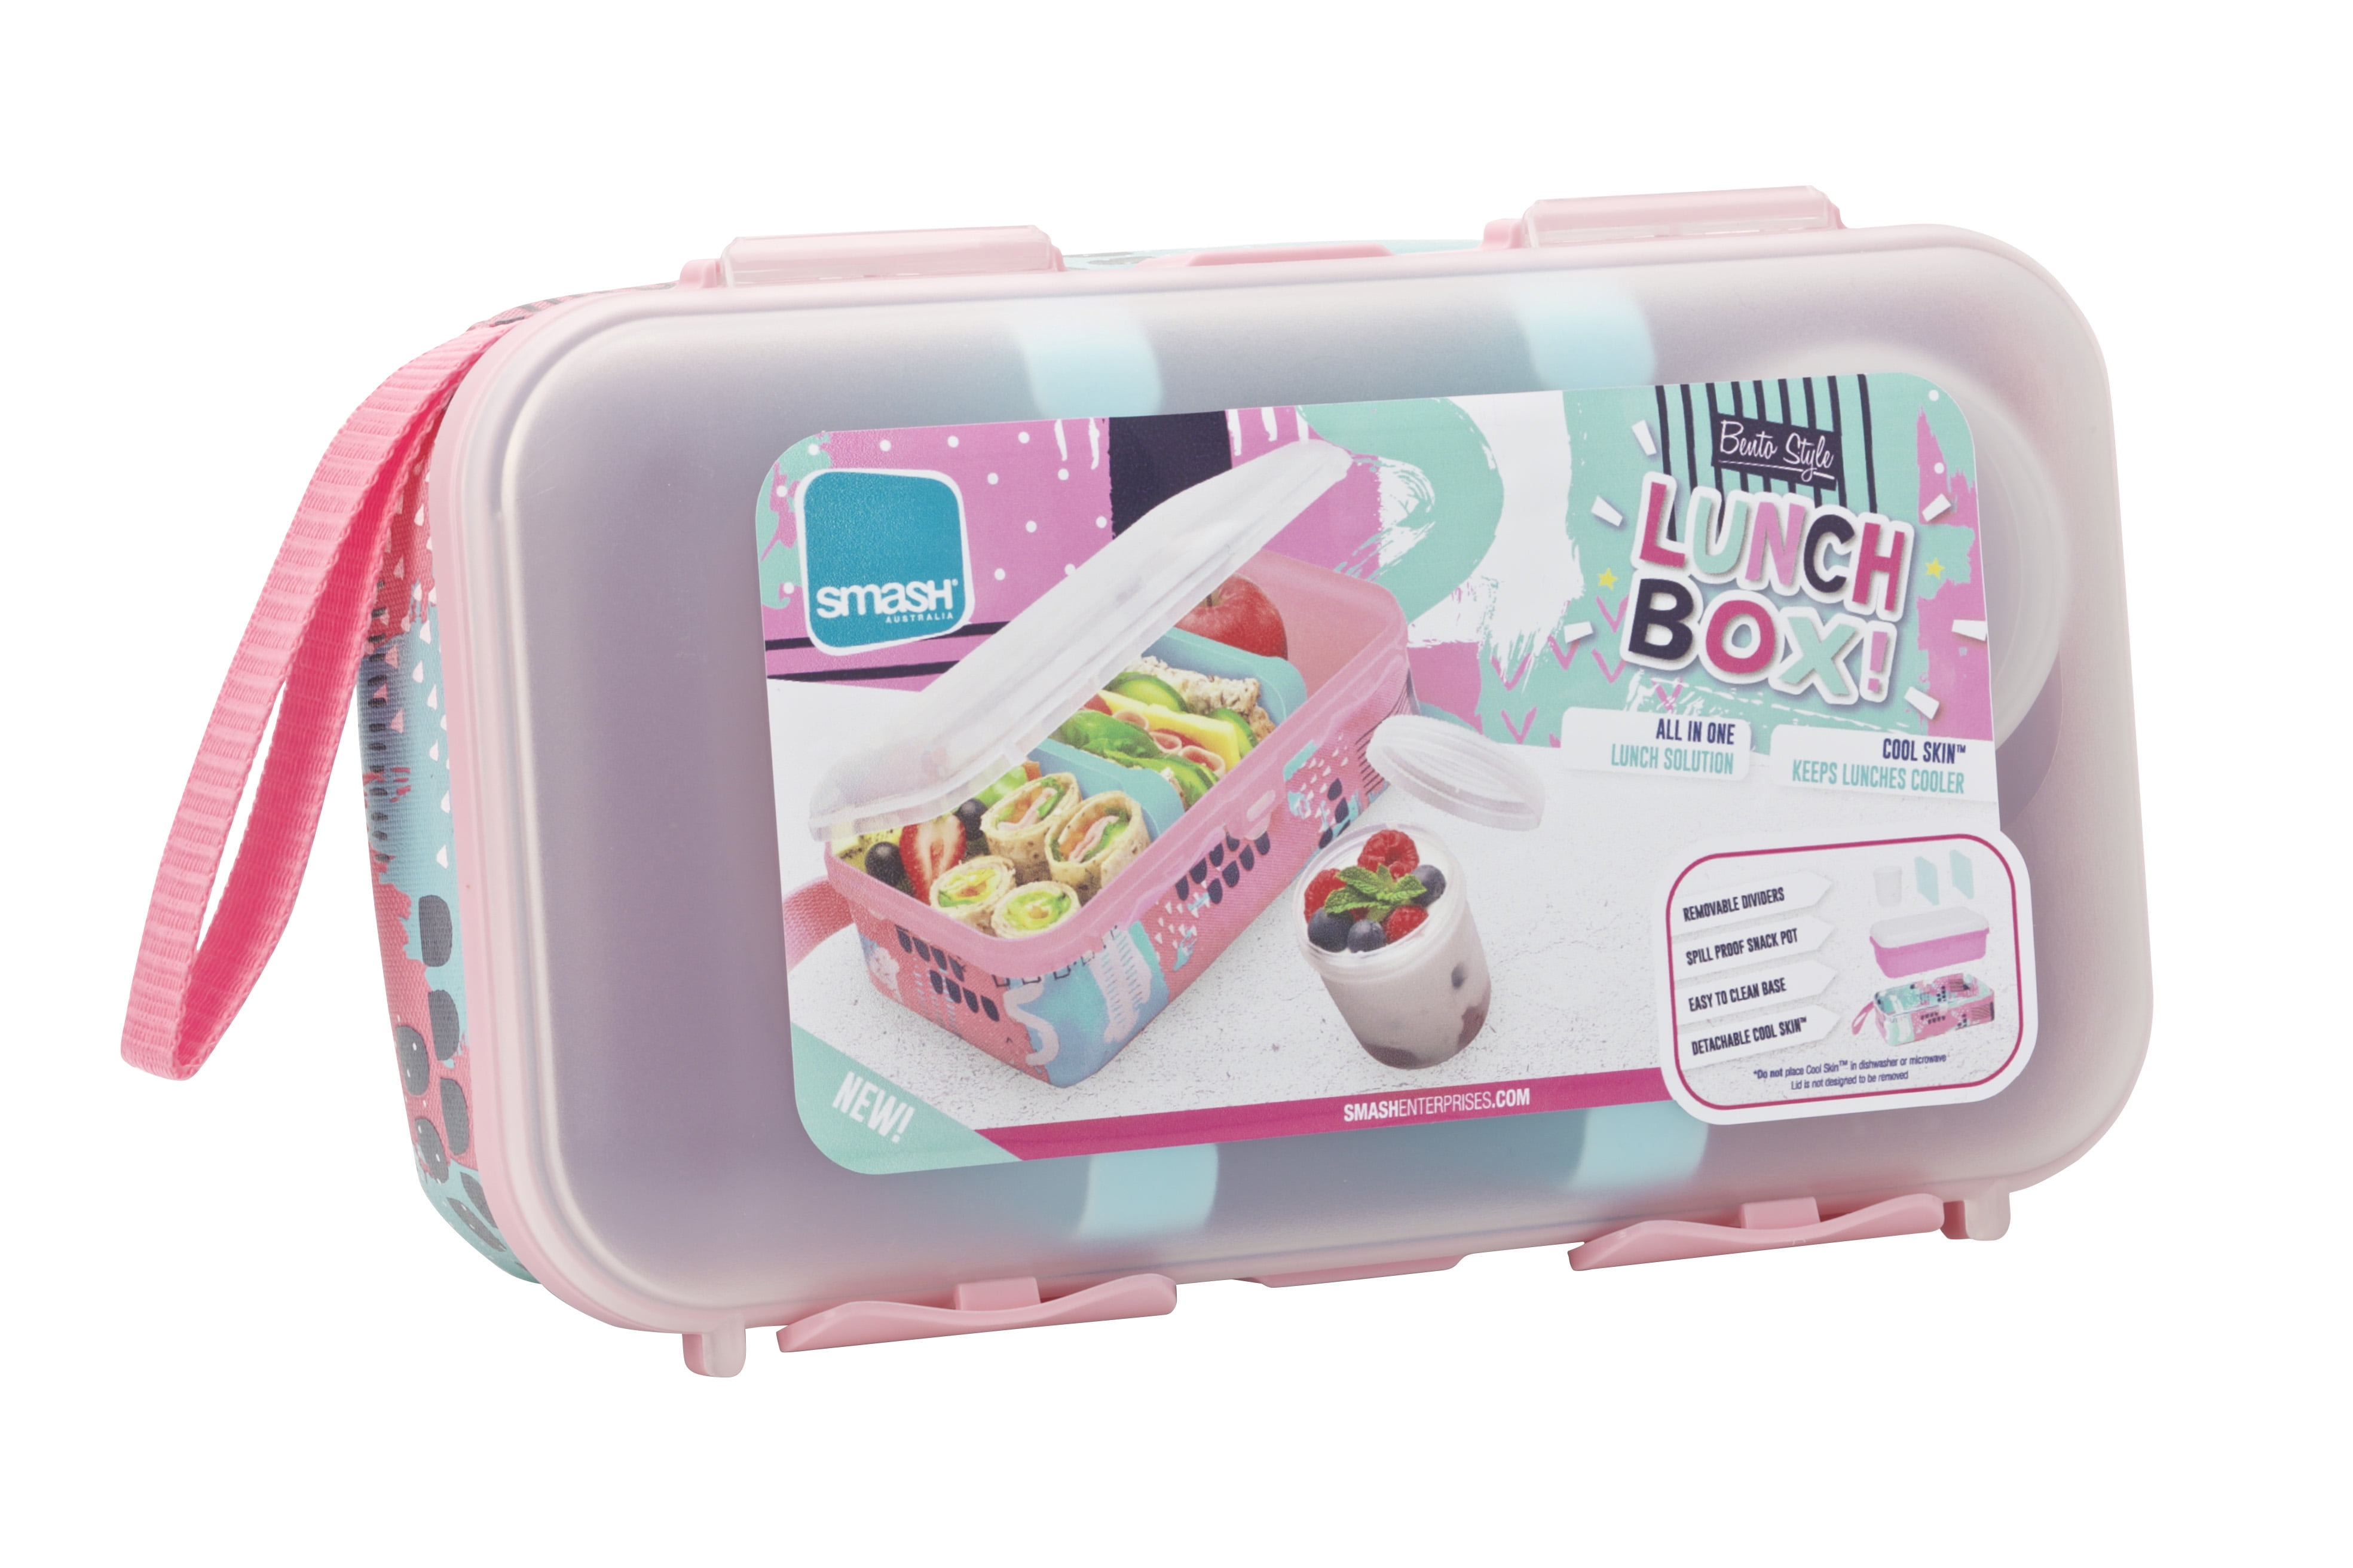 Maneki Neko Lucky Cat Bento Box Lunch Box with Fork & Spoon